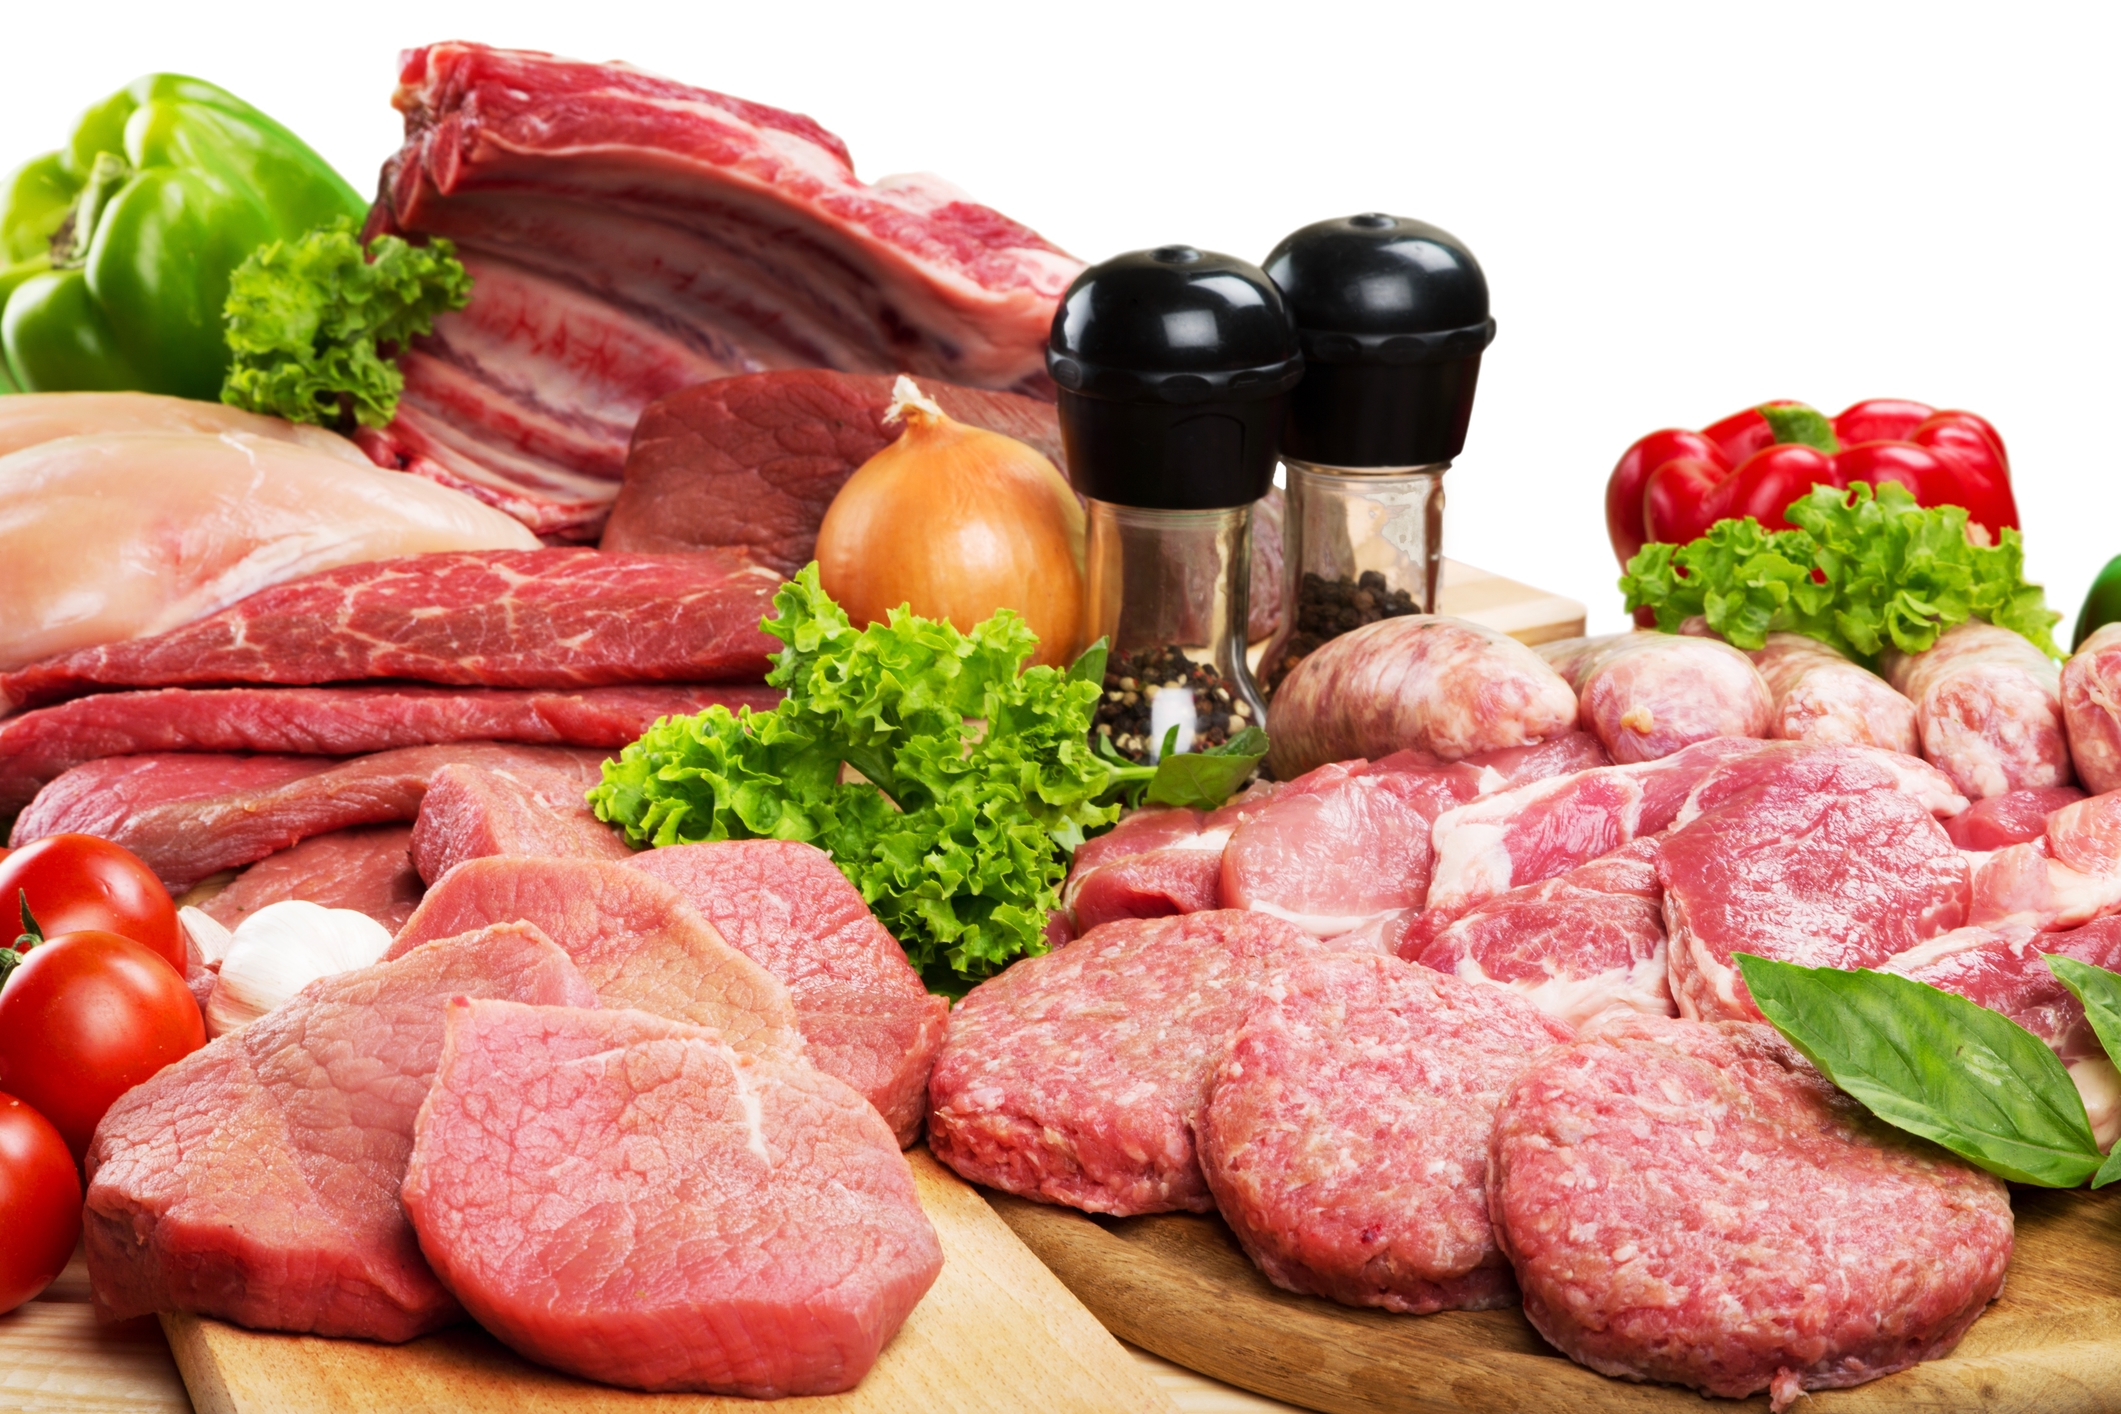 Does Pressure Cooking Meat Make It Tender?